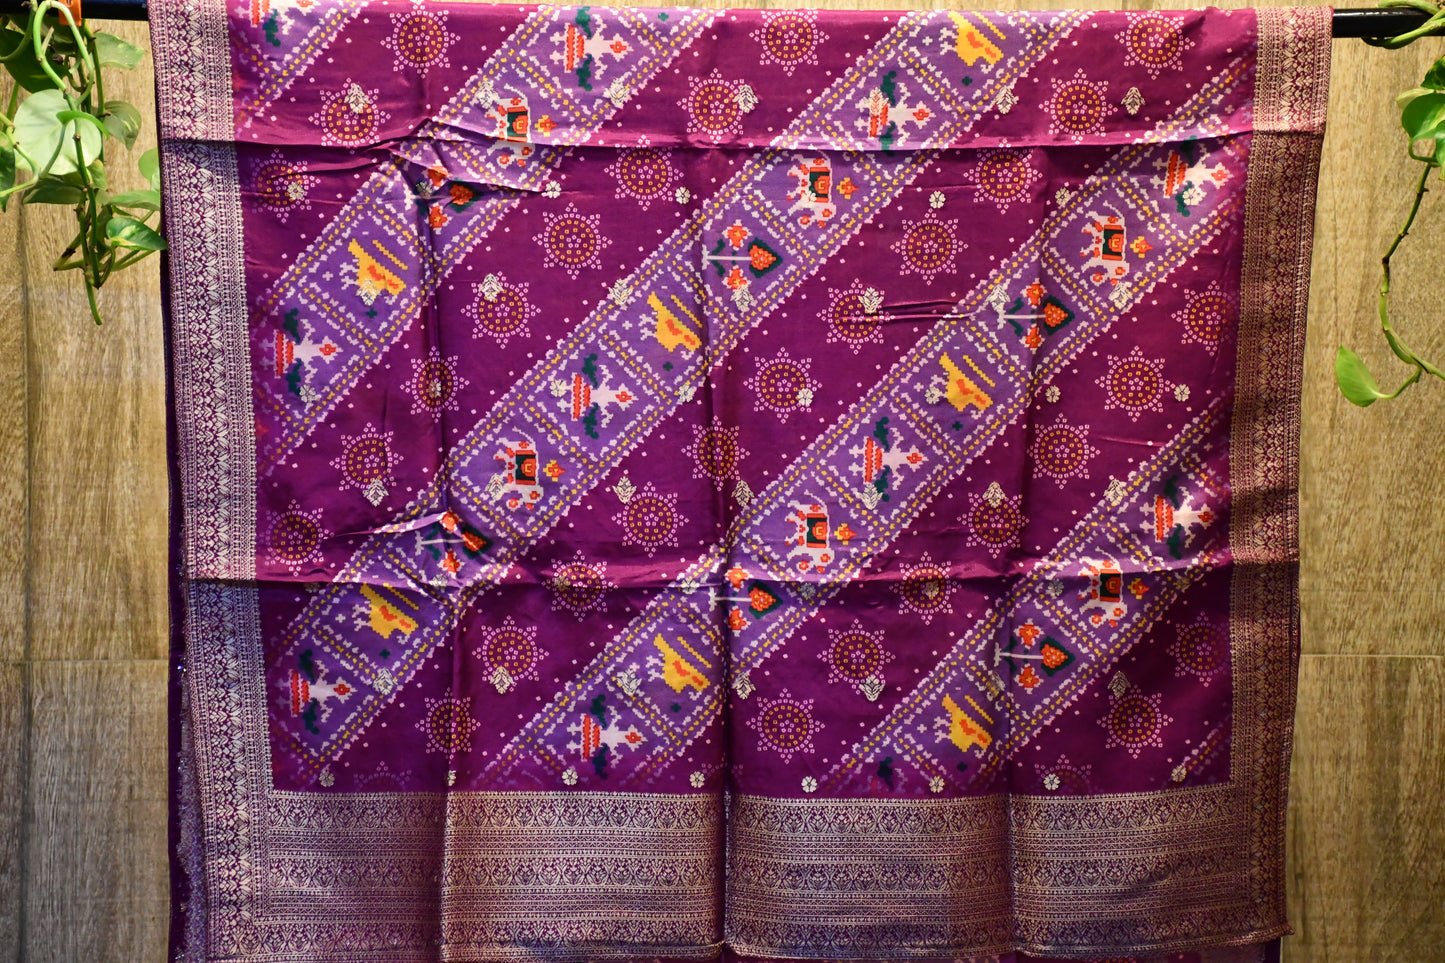 Purple silk dress material with zari embroidery